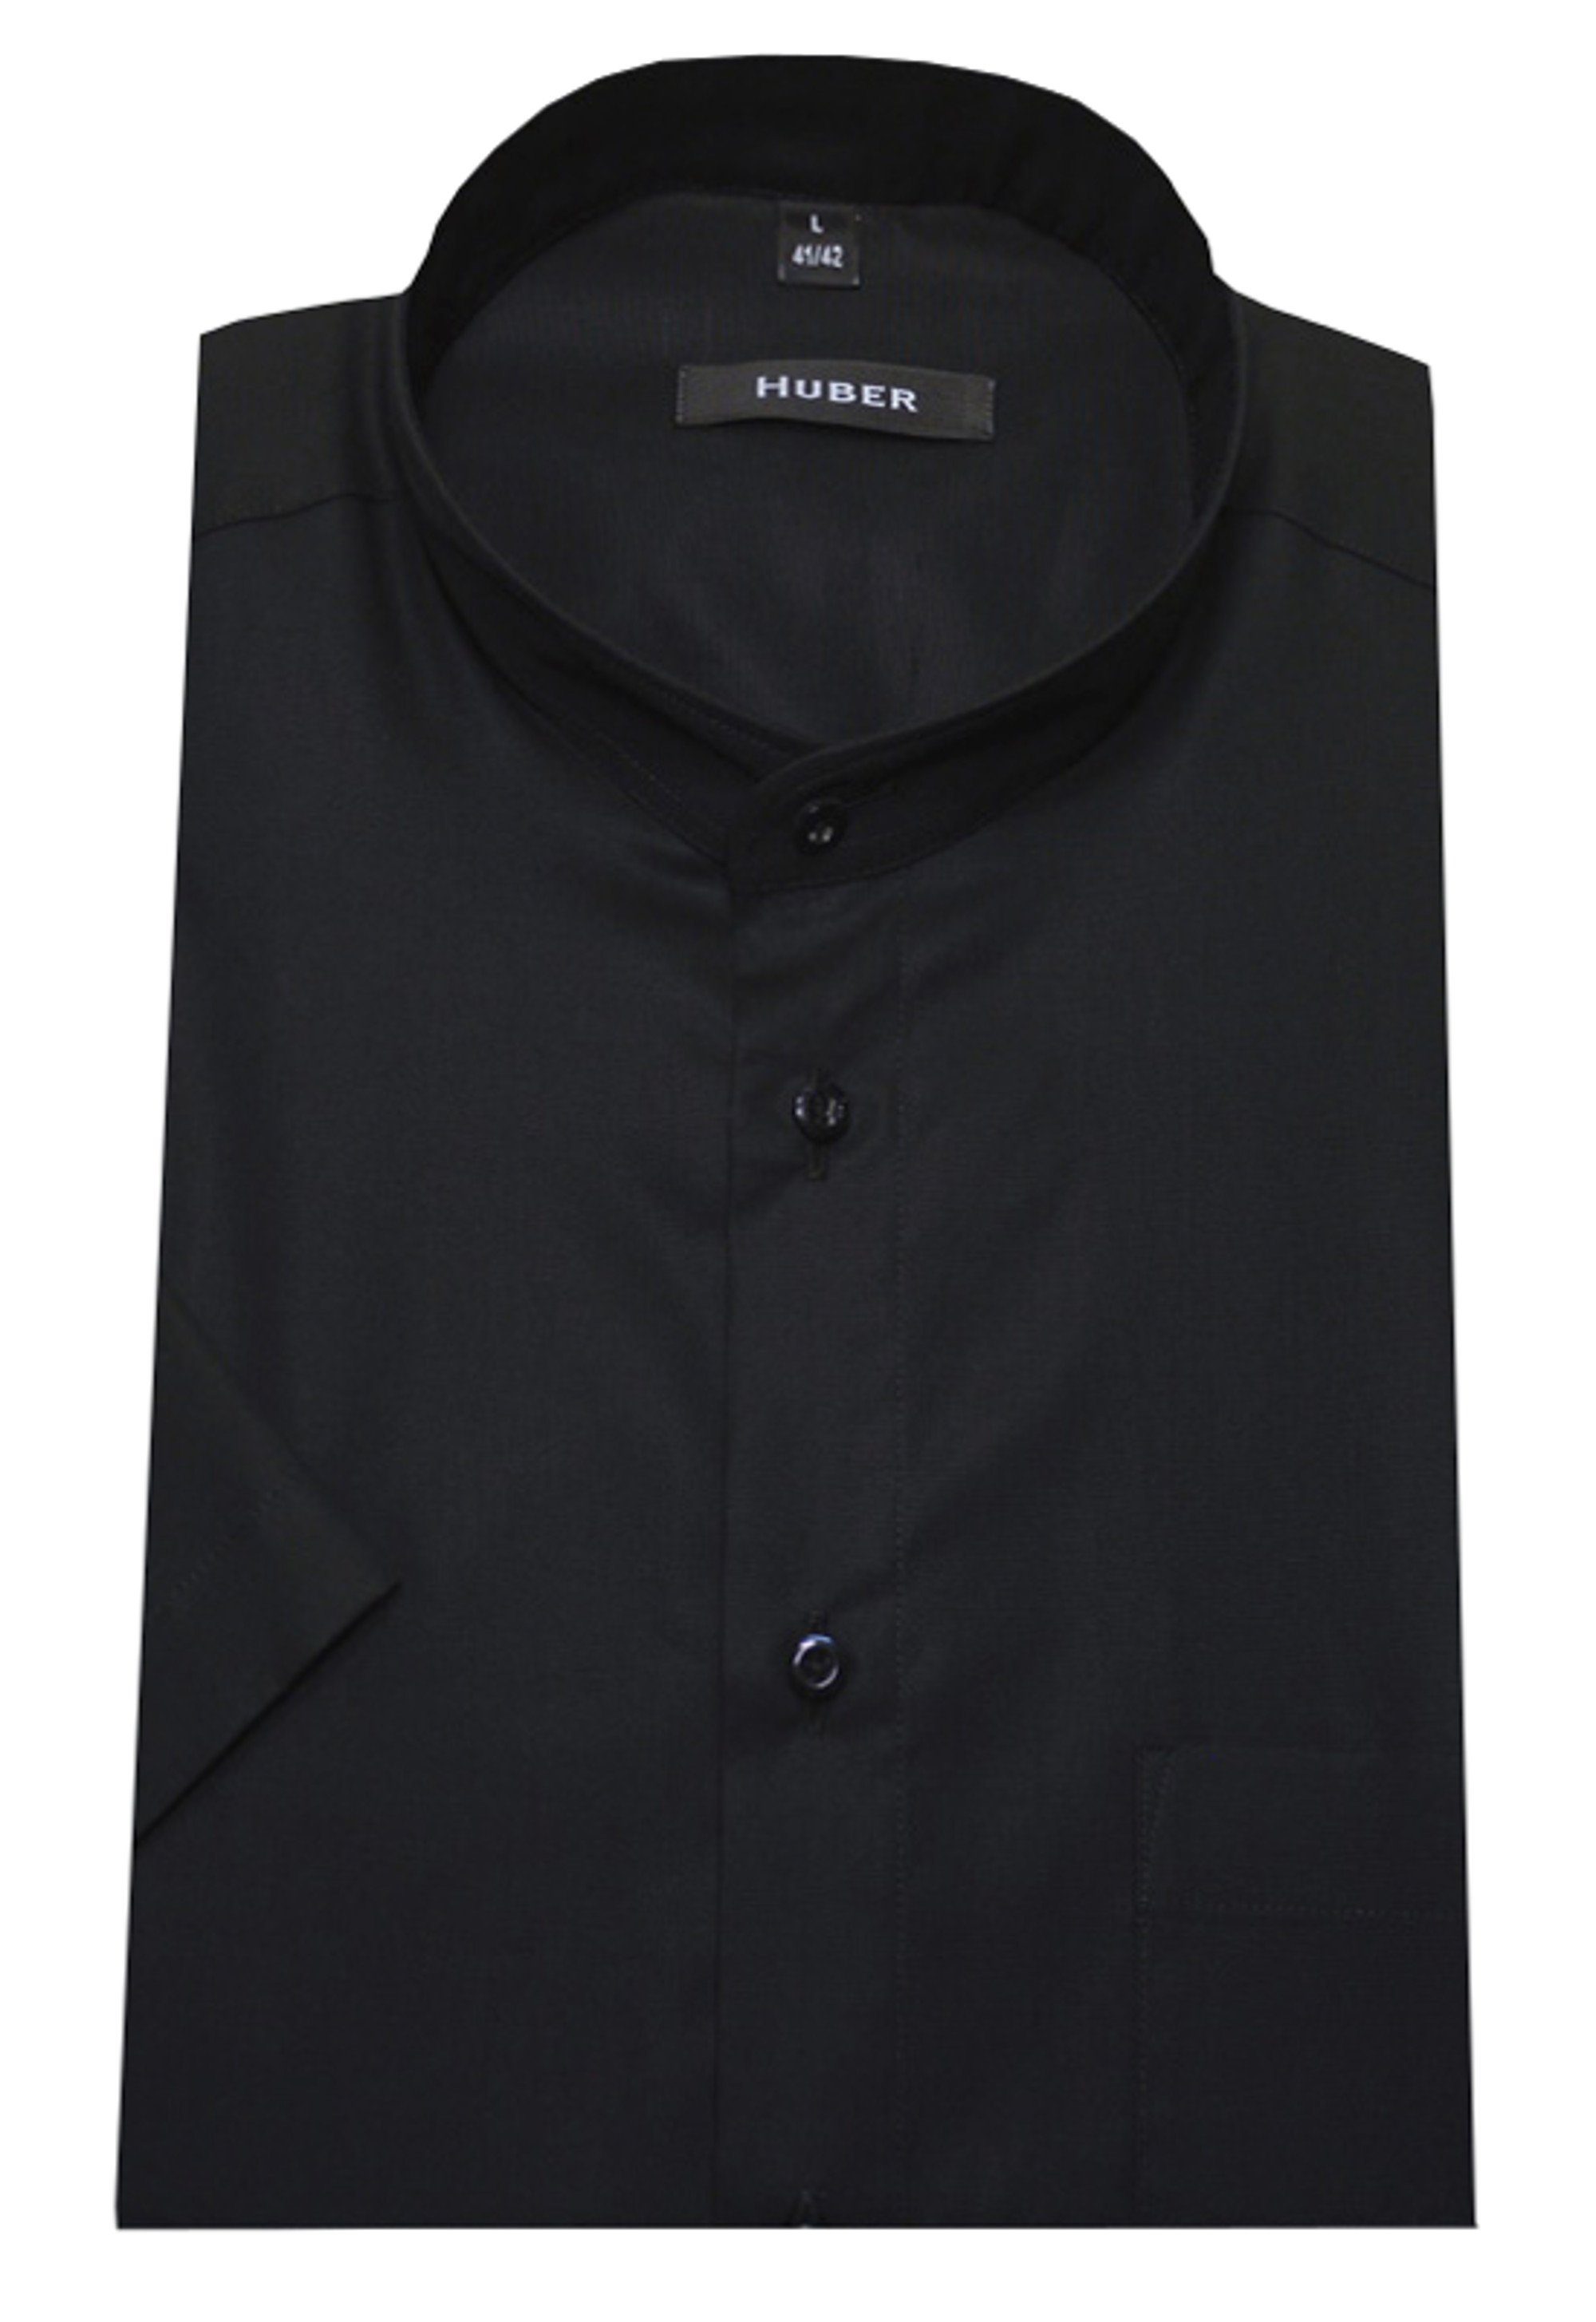 Huber Hemden Kurzarmhemd HU-0125 Stehkragen, Kurzarm, Regular Fit - gerader Schnitt, Made in EU! schwarz | Klassische Hemden